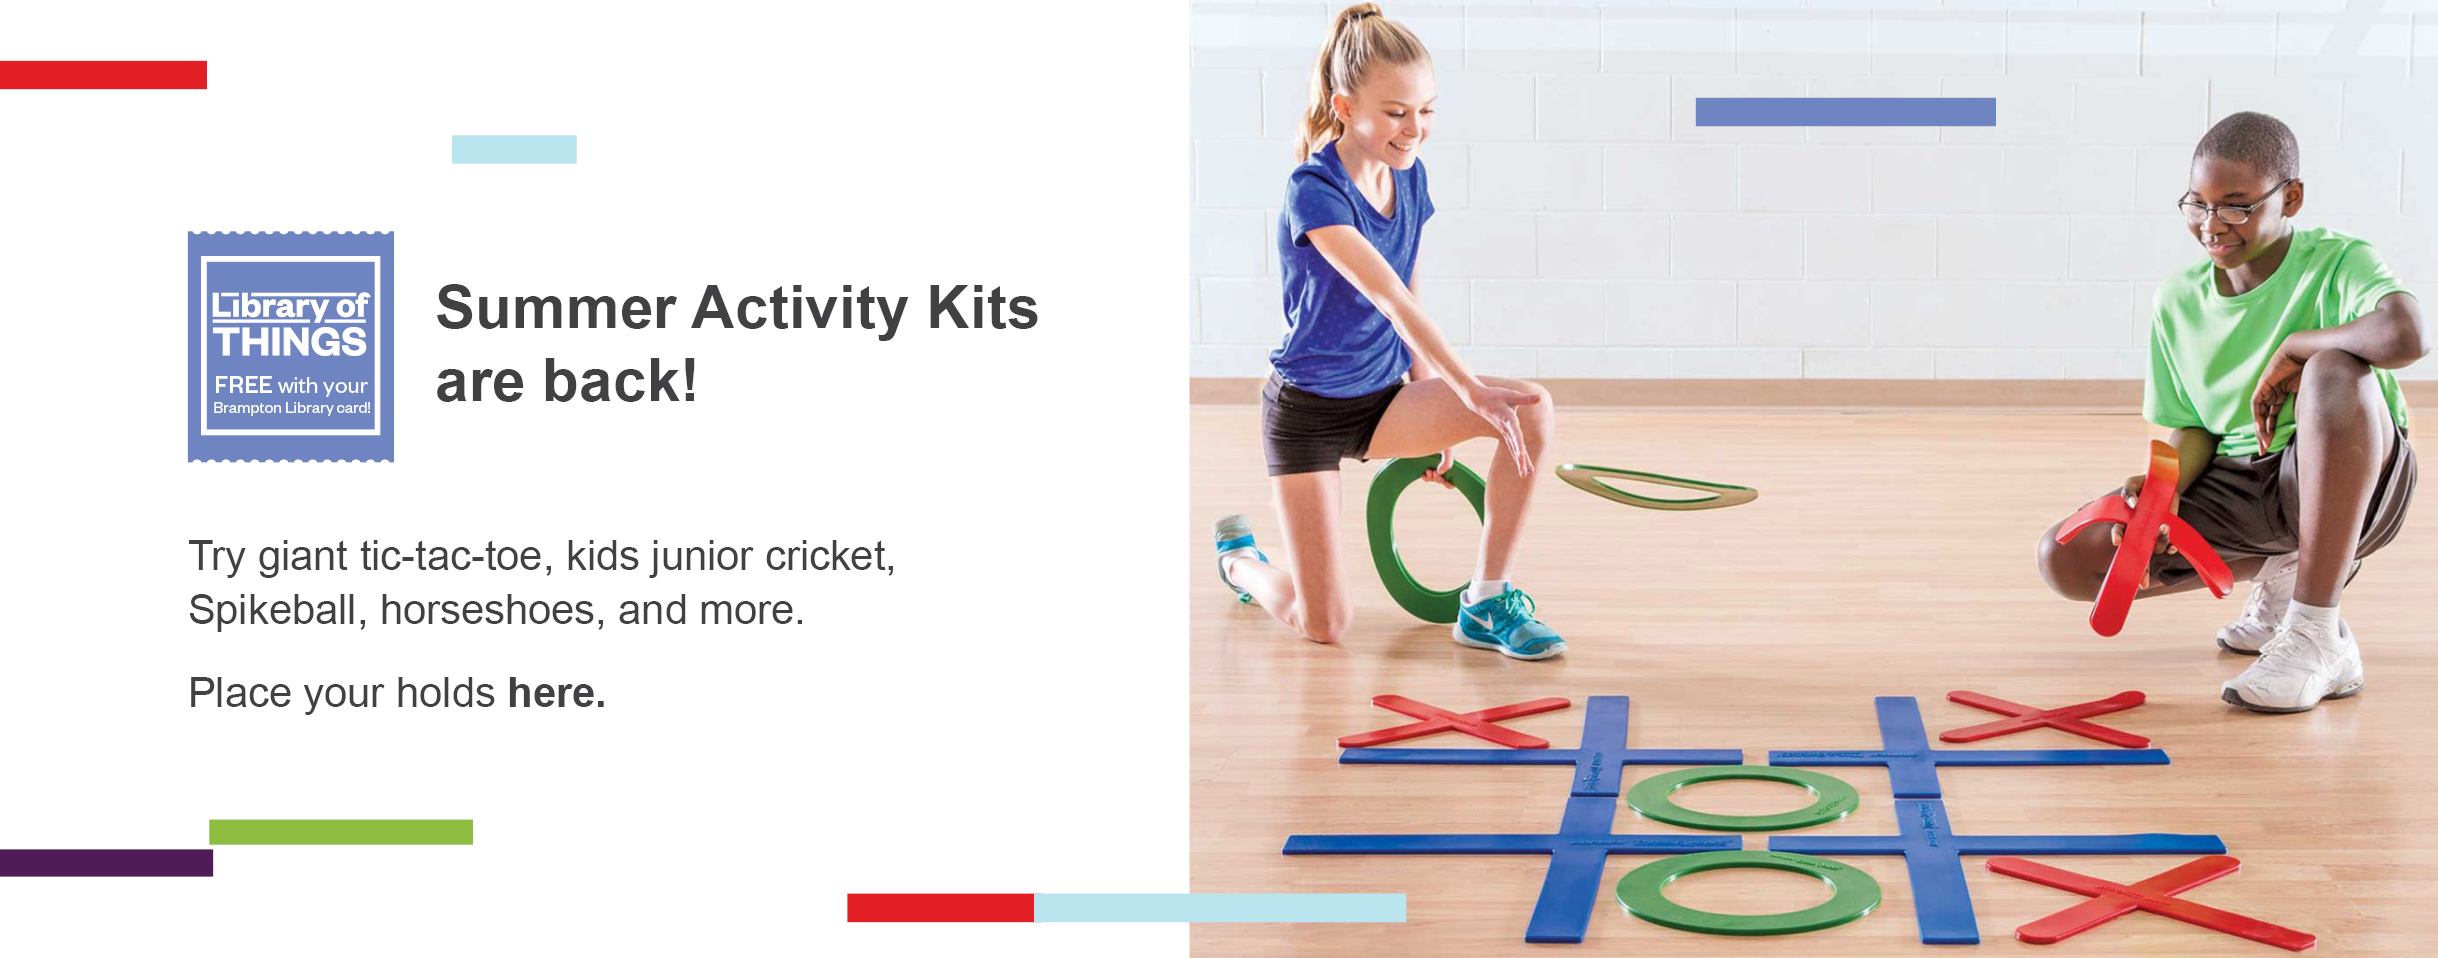 Summer activity kits